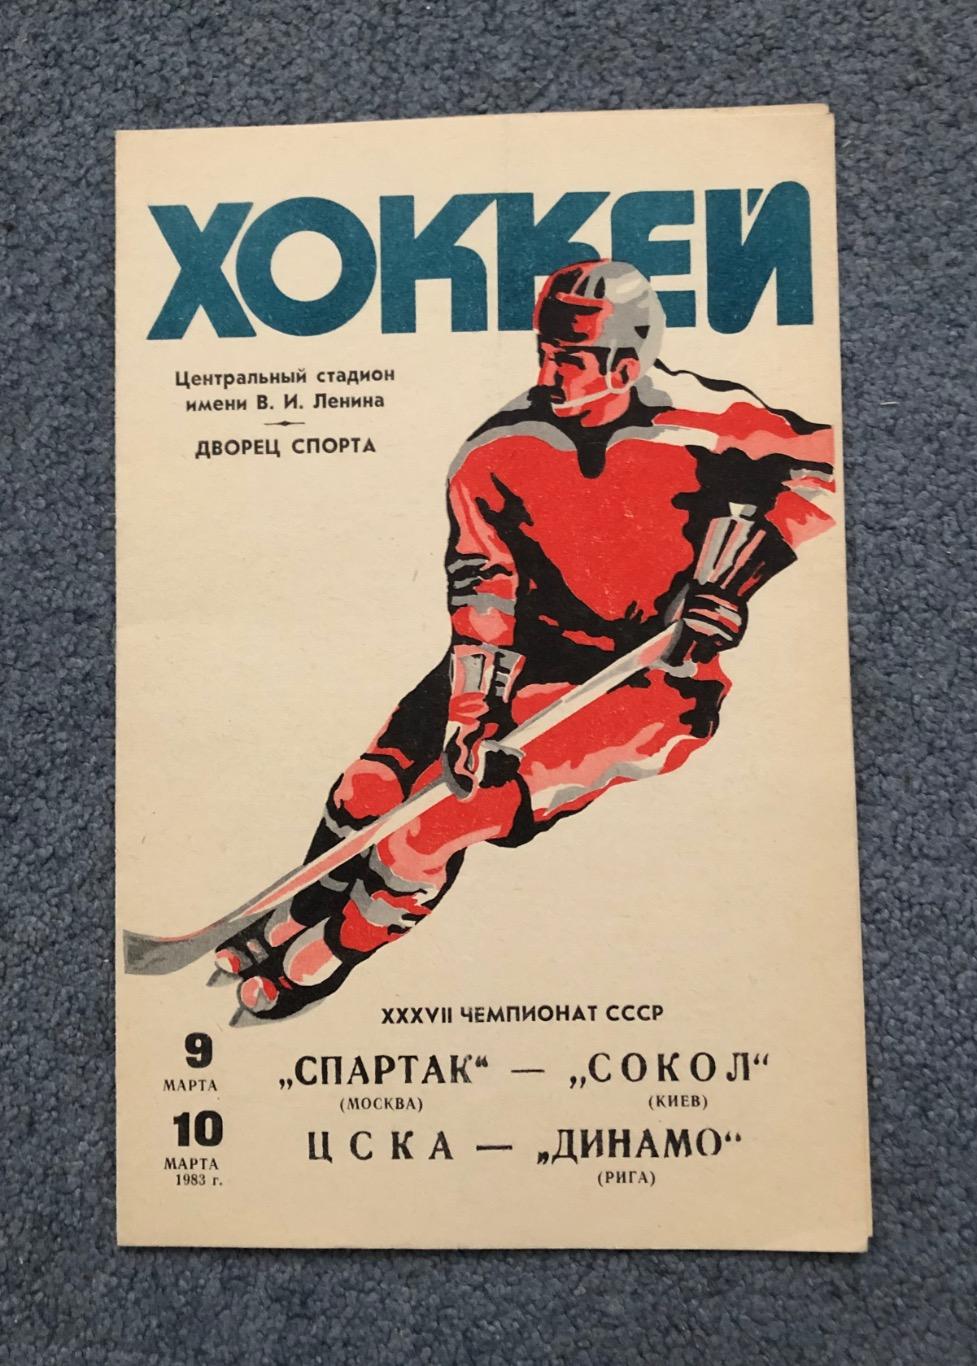 Спартак Москва - Сокол Киев, ЦСКА - Динамо Рига, 9 и 10.03.1983